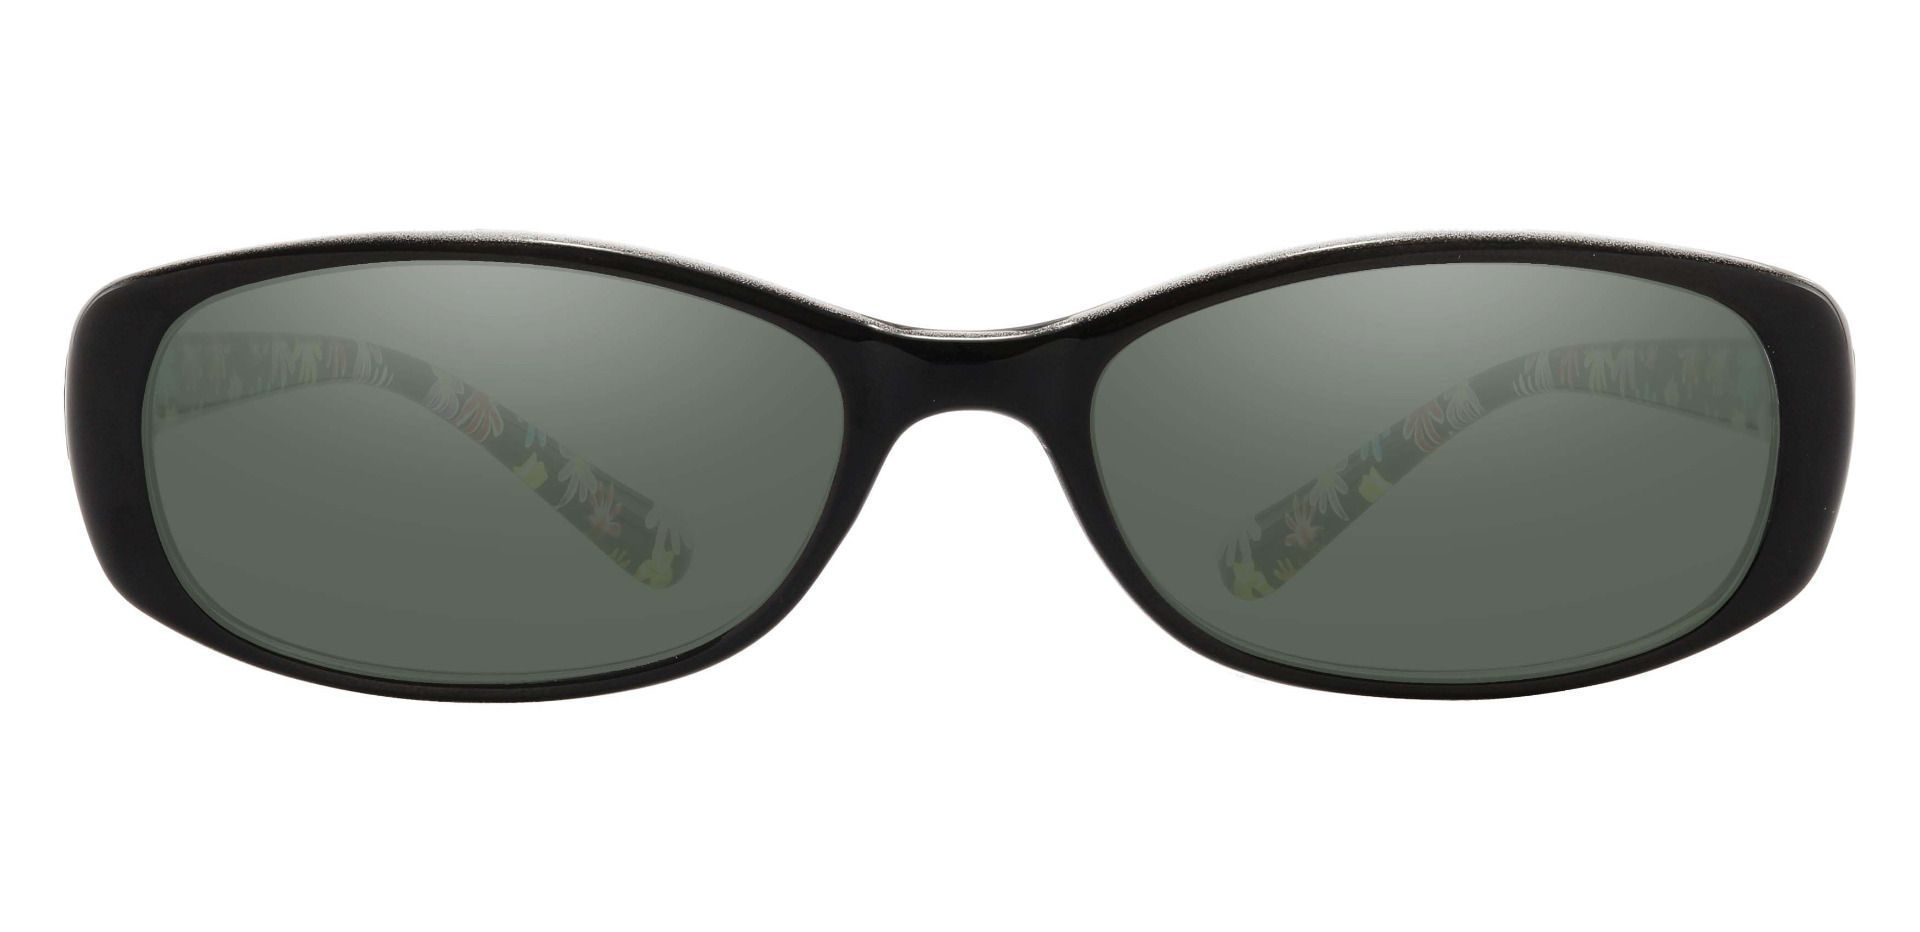 Bethesda Rectangle Prescription Sunglasses - Black Frame With Green Lenses